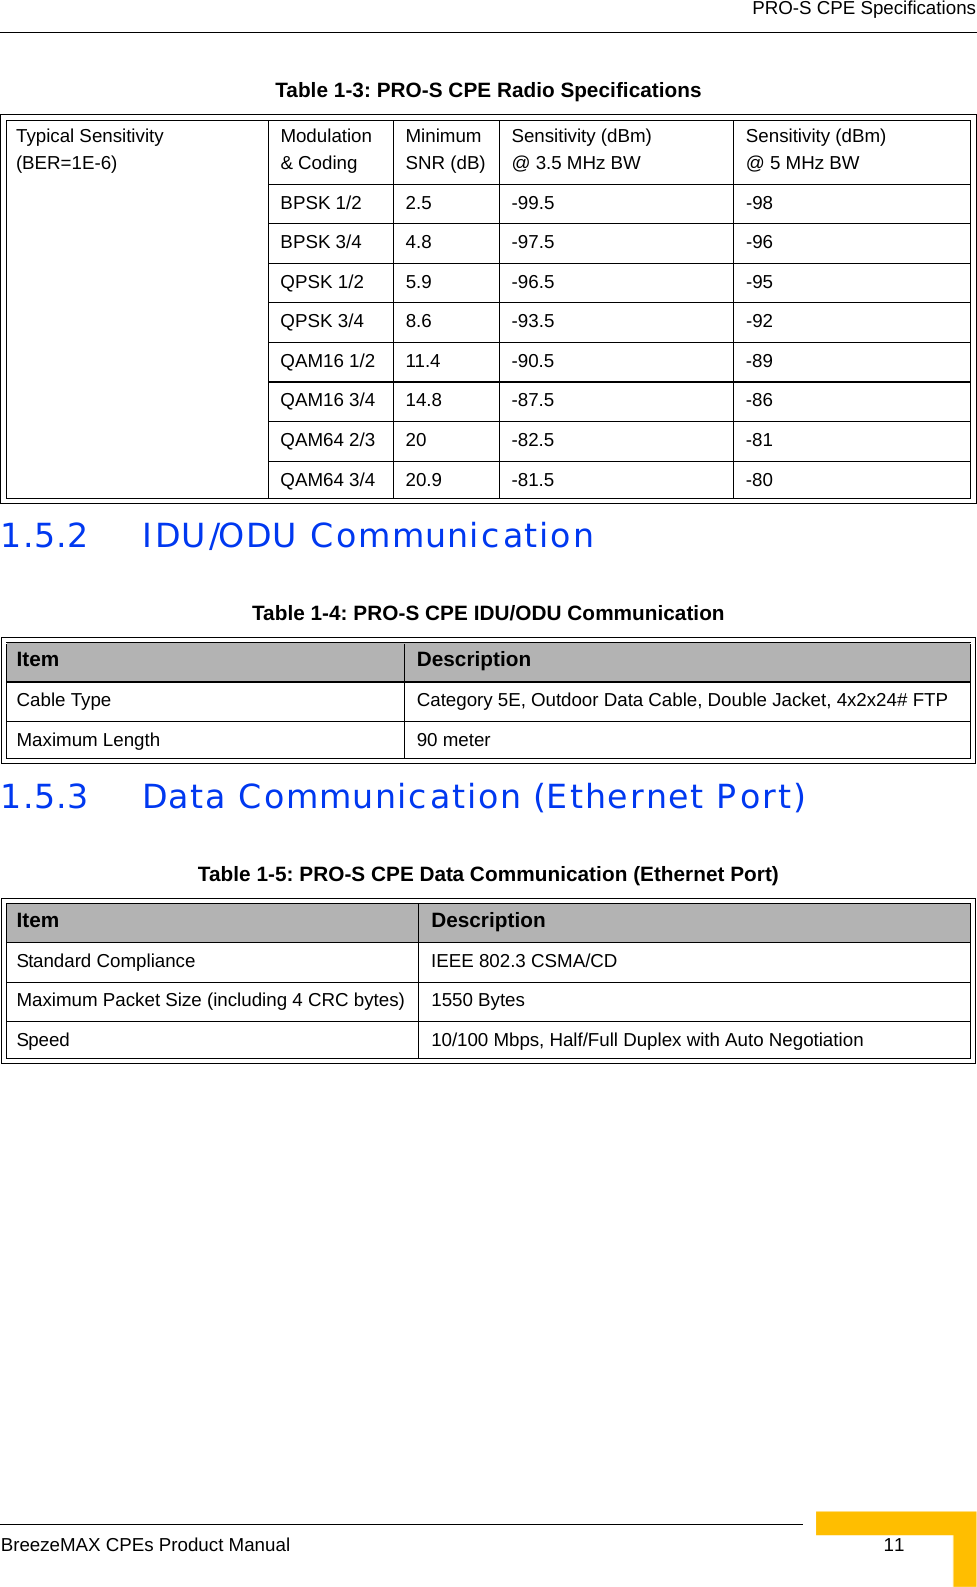 PRO-S CPE SpecificationsBreezeMAX CPEs Product Manual 111.5.2 IDU/ODU Communication1.5.3 Data Communication (Ethernet Port)Typical Sensitivity (BER=1E-6)Modulation &amp; CodingMinimum SNR (dB)Sensitivity (dBm) @ 3.5 MHz BWSensitivity (dBm) @ 5 MHz BWBPSK 1/2 2.5 -99.5 -98BPSK 3/4 4.8 -97.5 -96QPSK 1/2 5.9 -96.5 -95QPSK 3/4 8.6 -93.5 -92QAM16 1/2 11.4 -90.5 -89QAM16 3/4 14.8 -87.5 -86QAM64 2/3 20 -82.5 -81QAM64 3/4 20.9 -81.5 -80Table 1-4: PRO-S CPE IDU/ODU CommunicationItem DescriptionCable Type Category 5E, Outdoor Data Cable, Double Jacket, 4x2x24# FTPMaximum Length 90 meter Table 1-5: PRO-S CPE Data Communication (Ethernet Port)Item DescriptionStandard Compliance IEEE 802.3 CSMA/CDMaximum Packet Size (including 4 CRC bytes) 1550 BytesSpeed 10/100 Mbps, Half/Full Duplex with Auto NegotiationTable 1-3: PRO-S CPE Radio Specifications